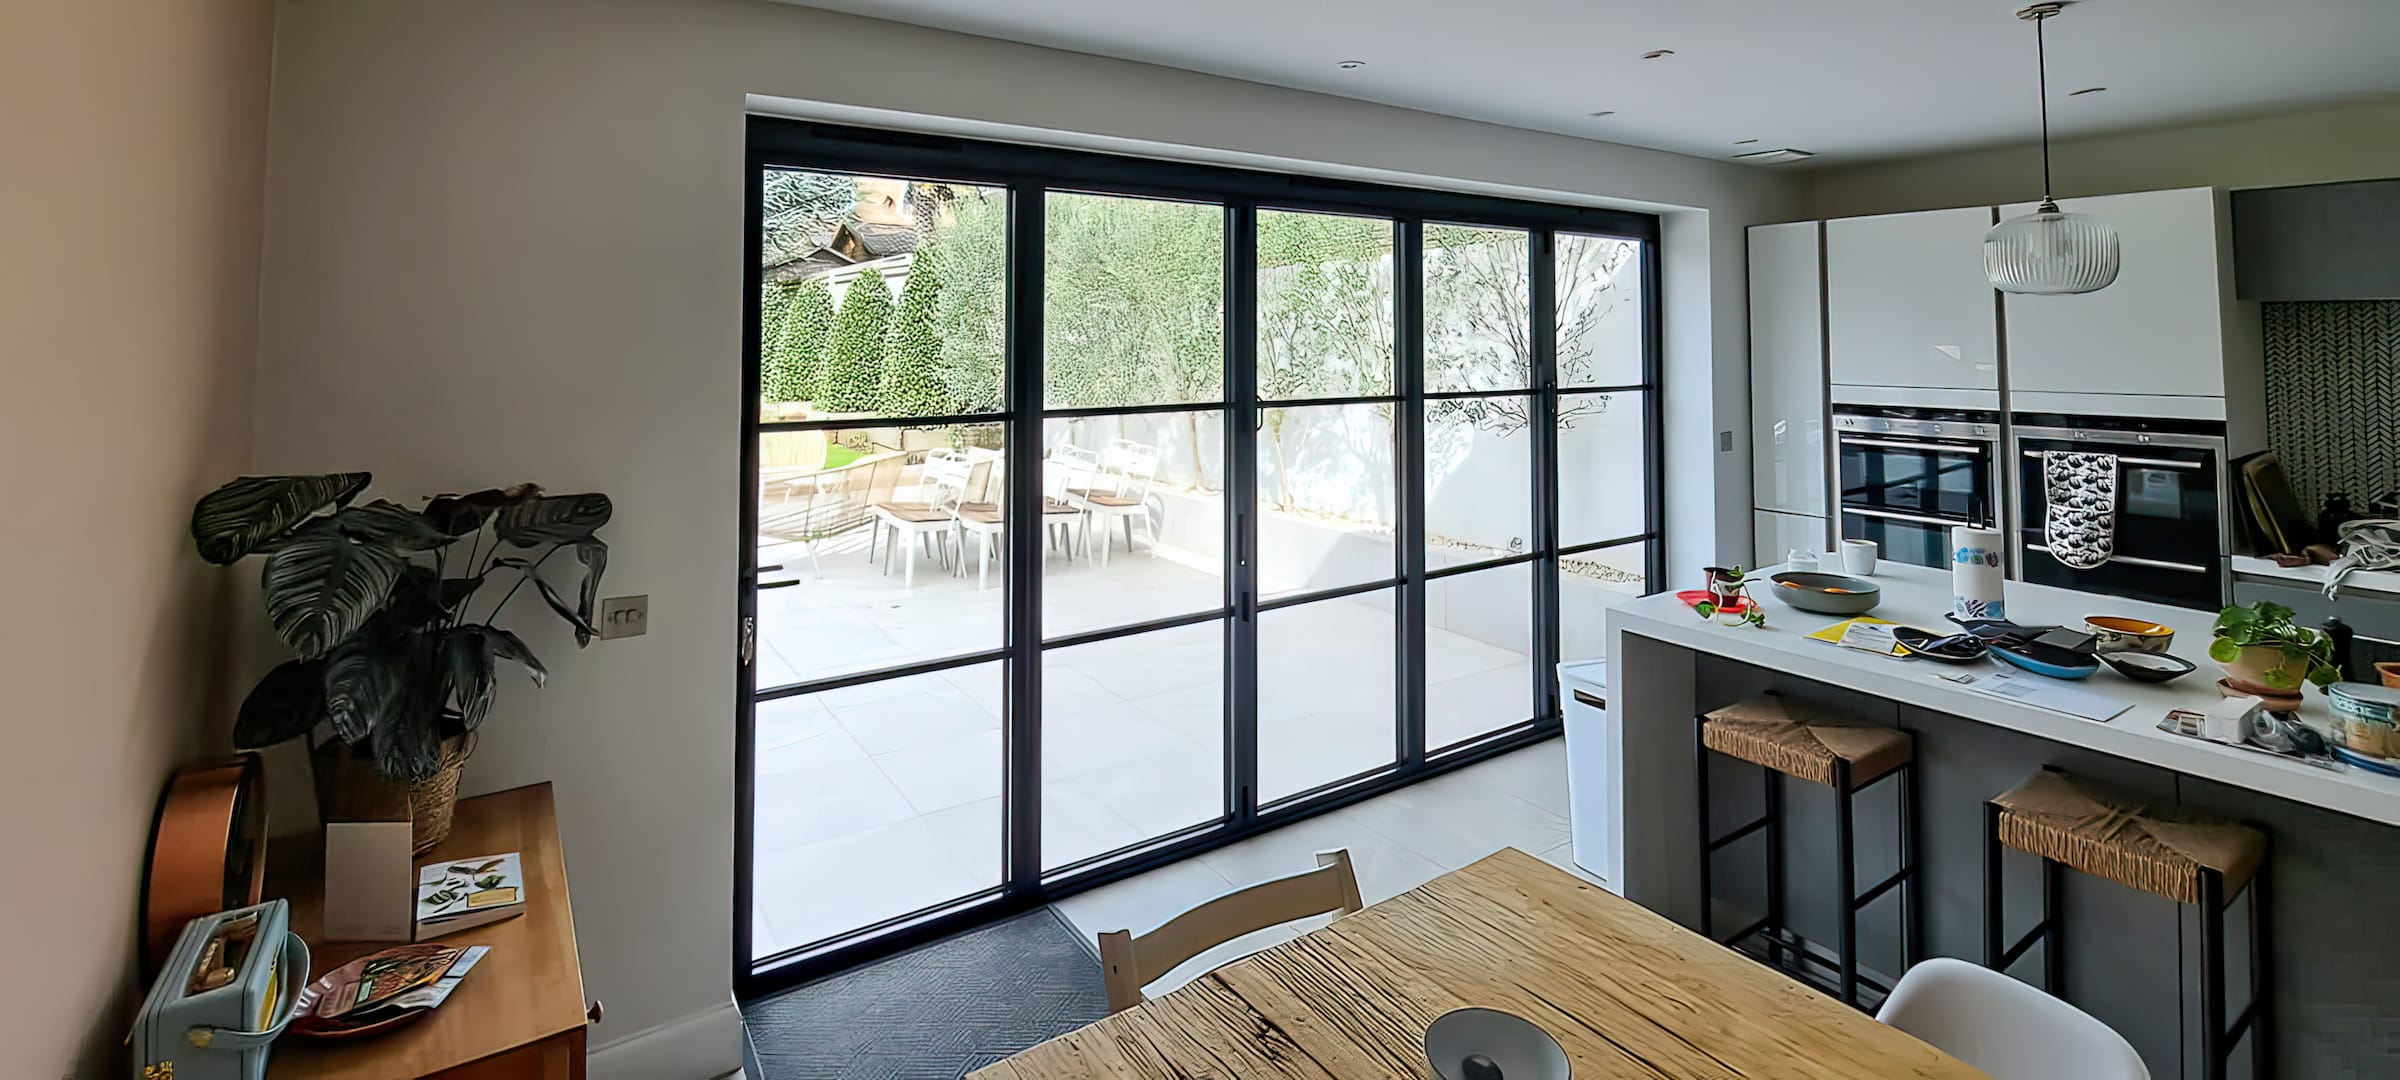 kitchen renovation with slim steel look bifold doors and patio views.